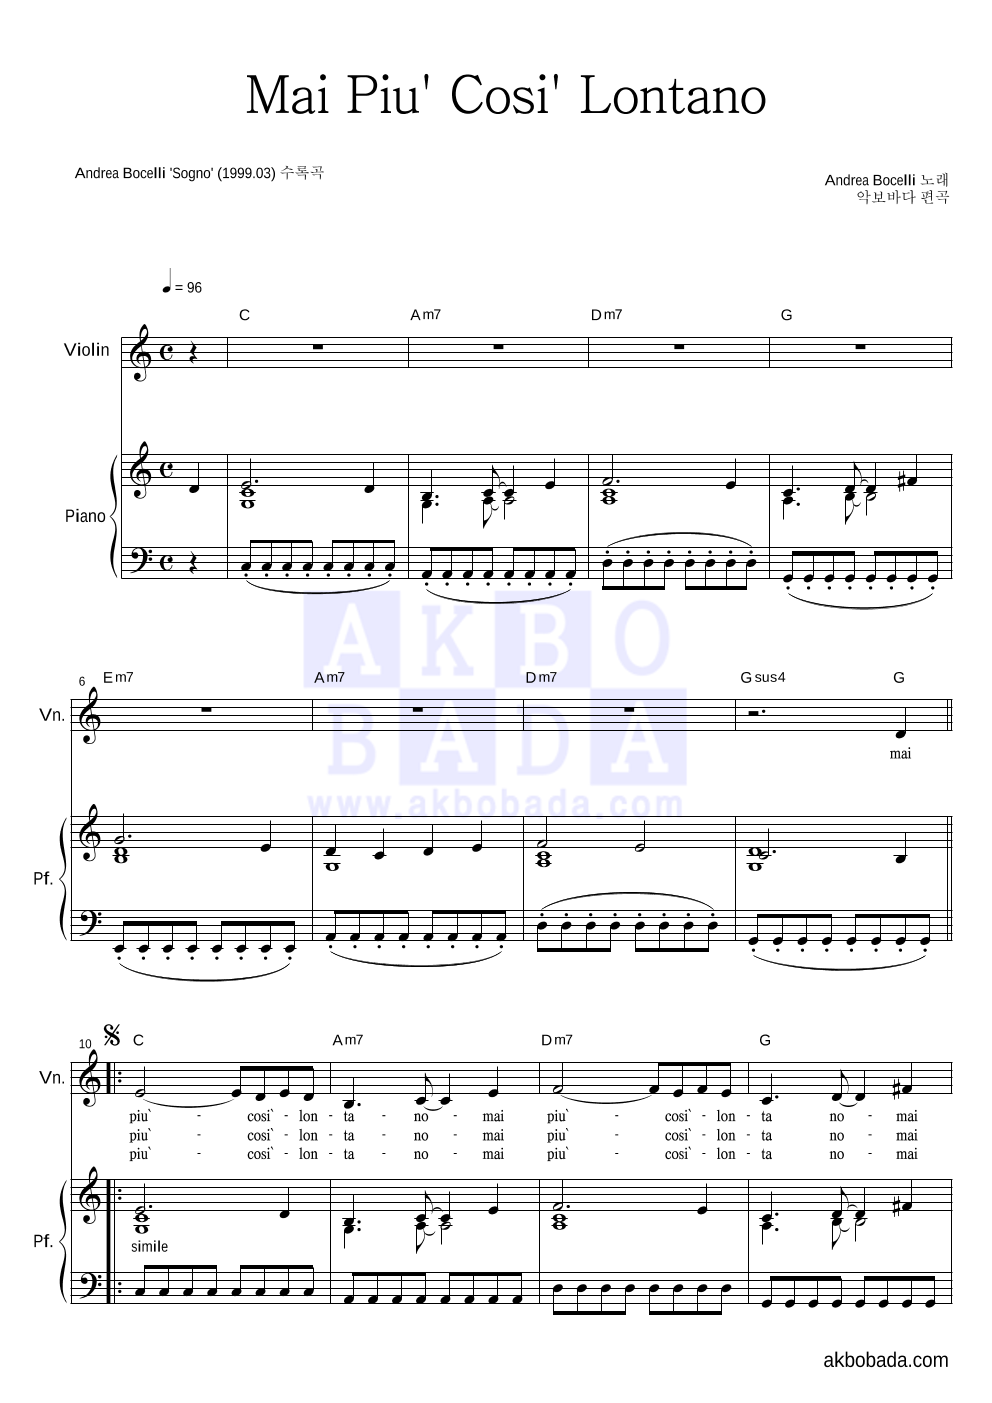 Andrea Bocelli - Mai Piu' Cosi' Lontano 바이올린&피아노 악보 